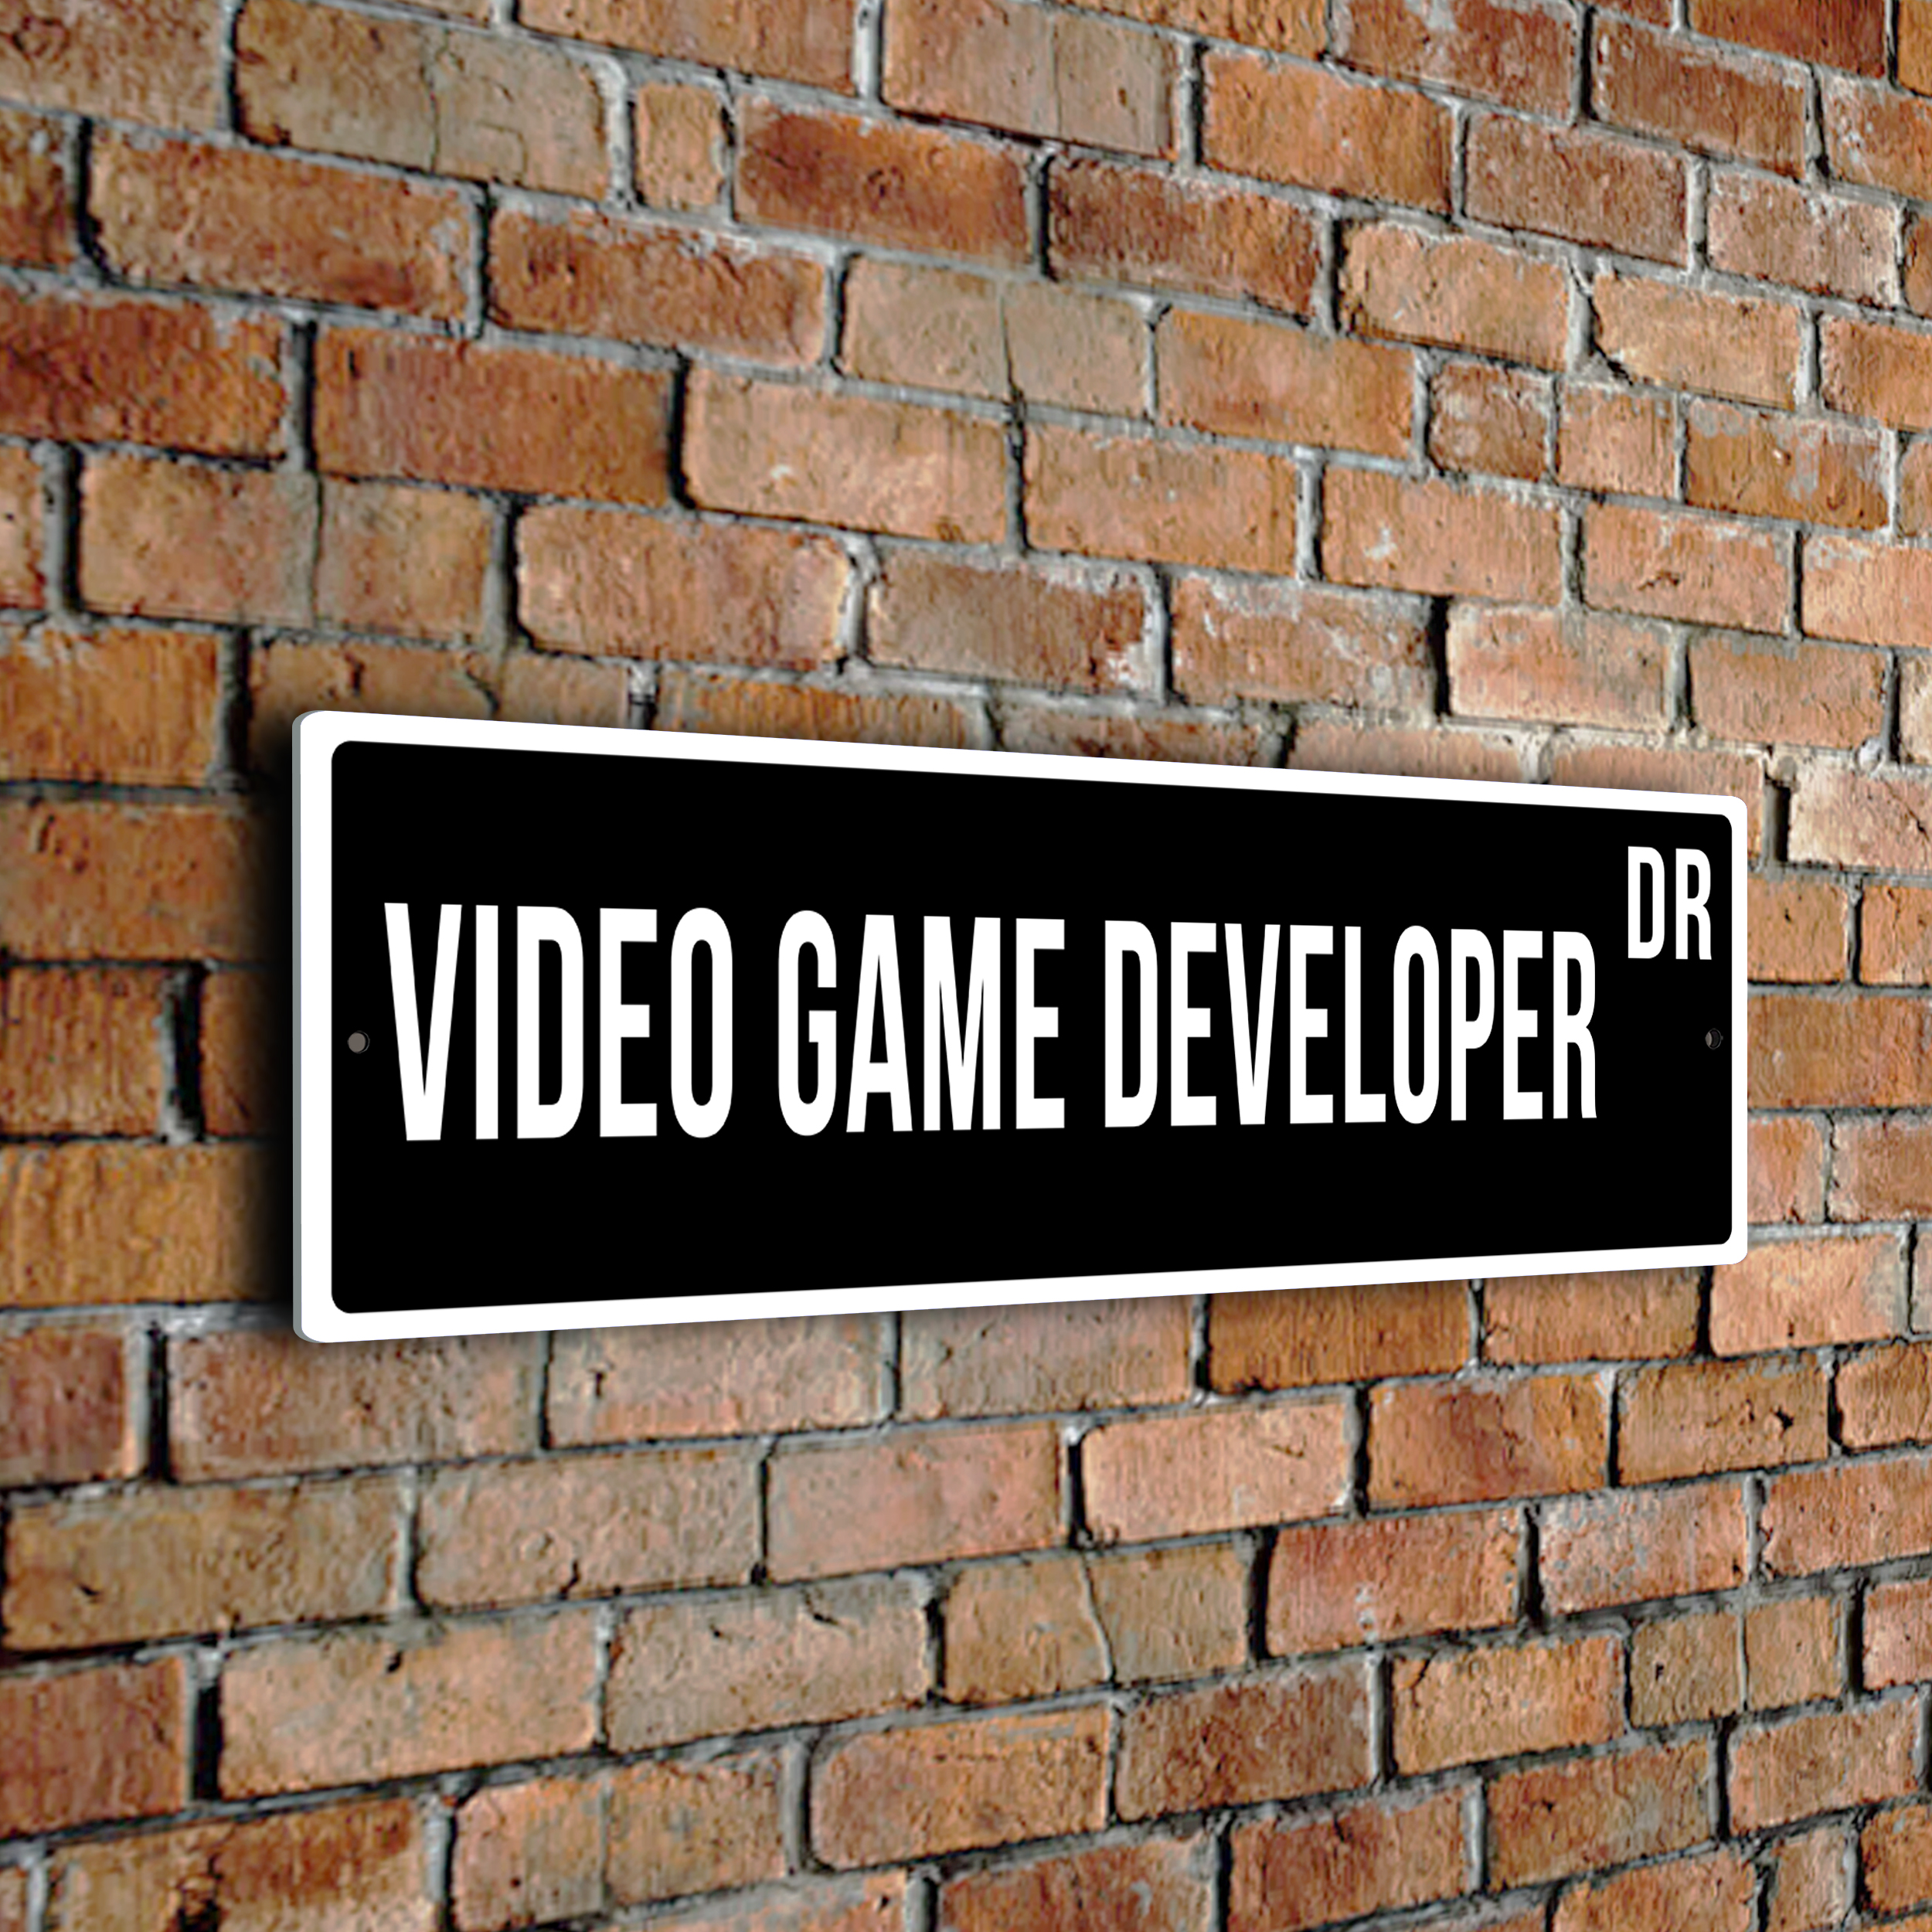 Video Game Developer street sign